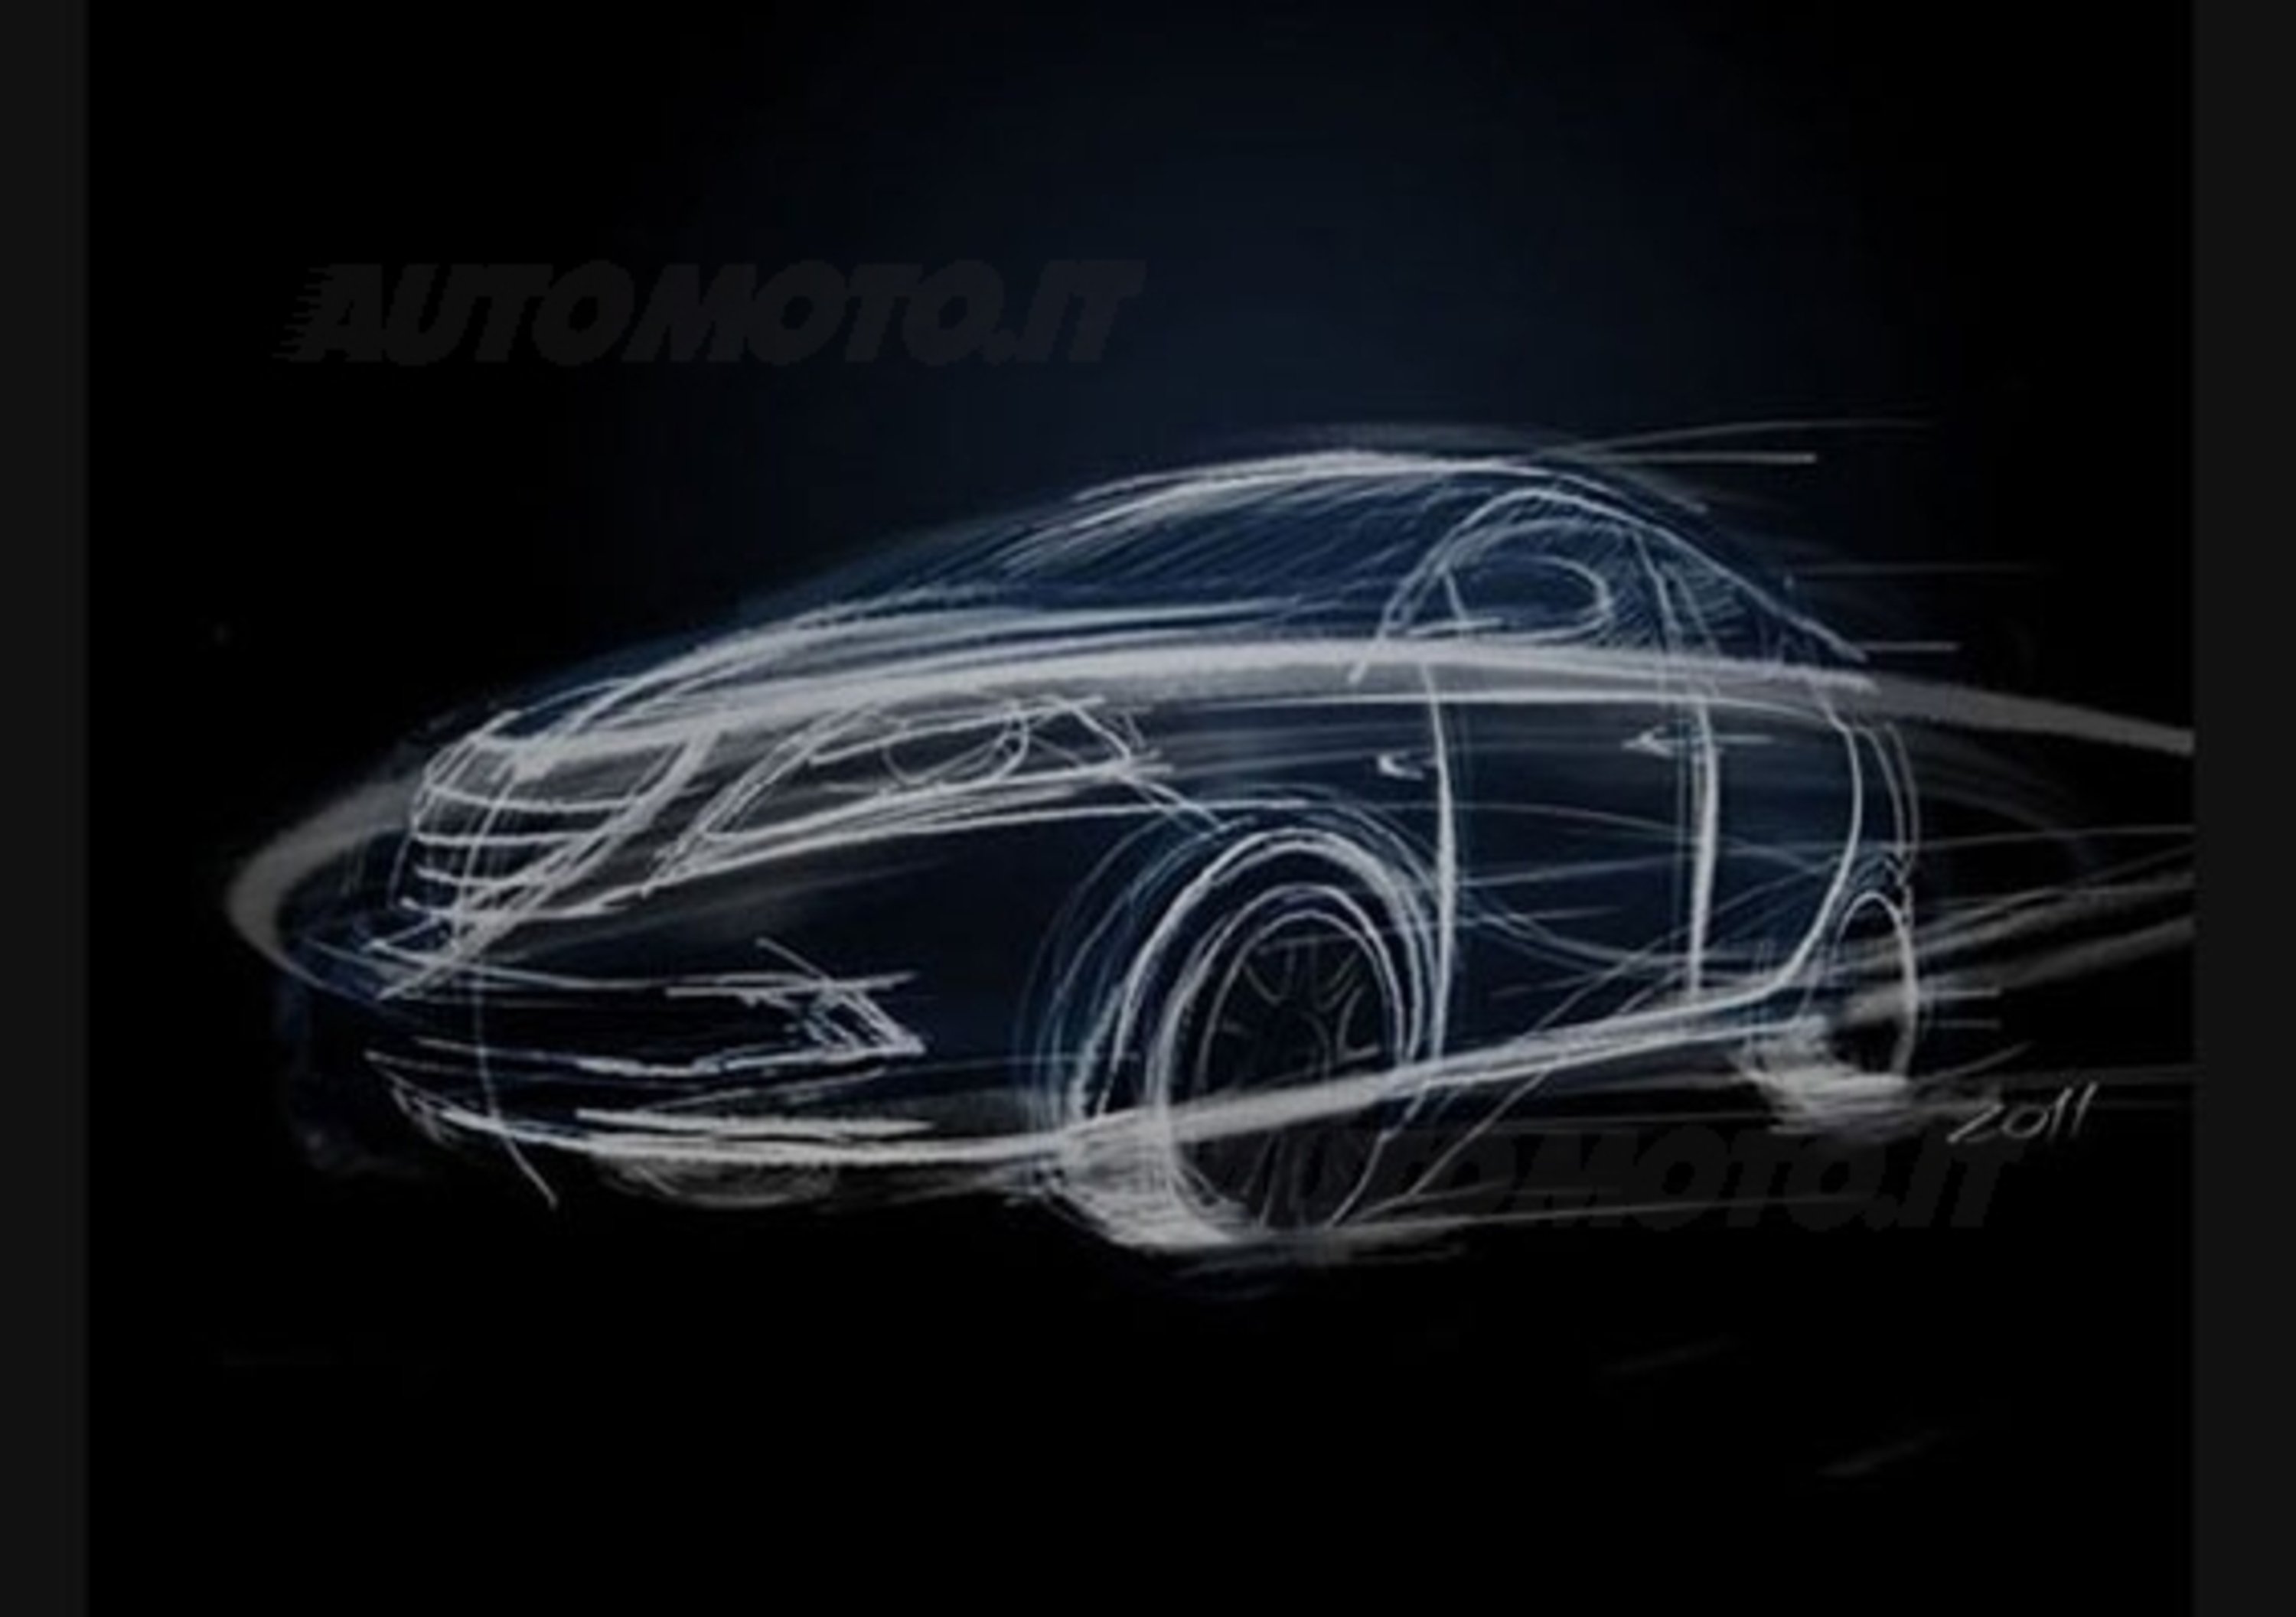 Nuova Lancia Ypsilon 2011 - ecco il teaser